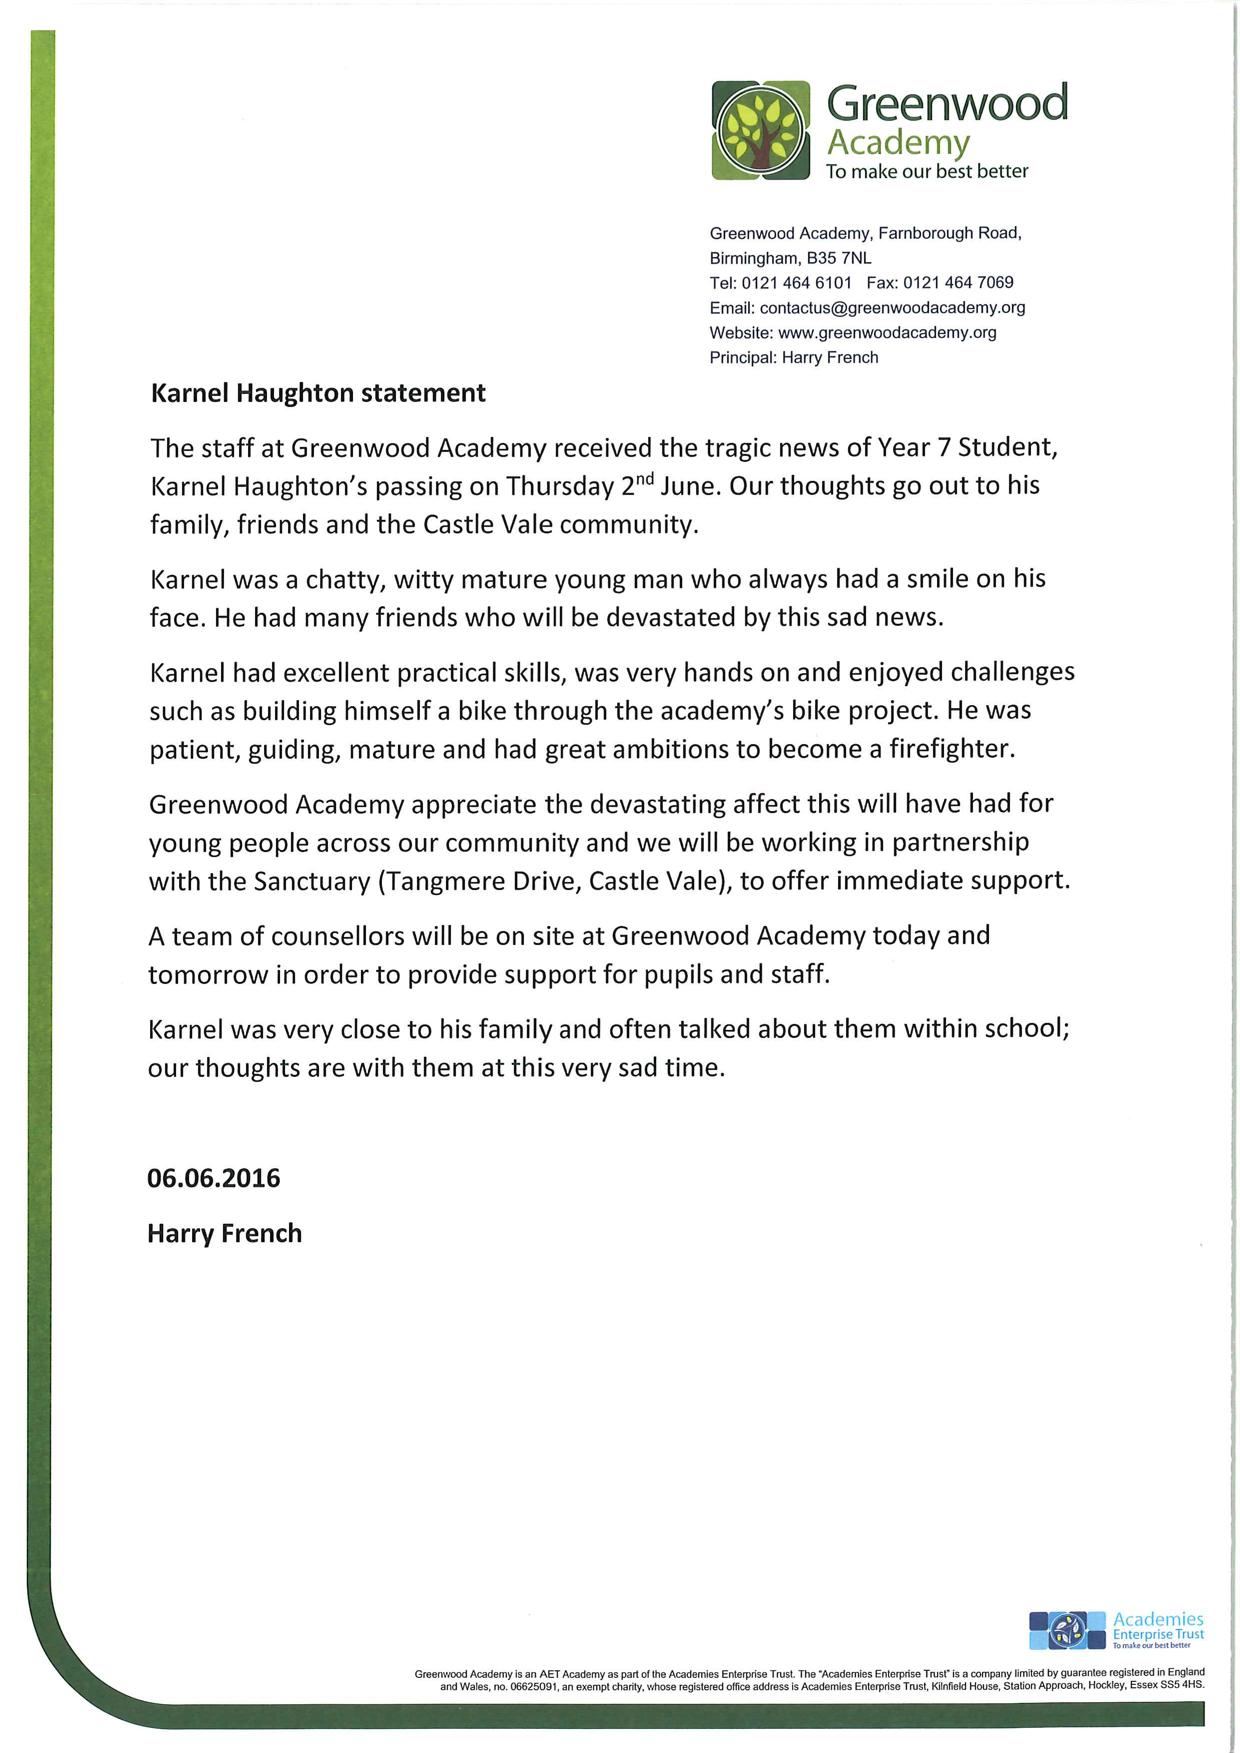 Karnel Haughton school statement